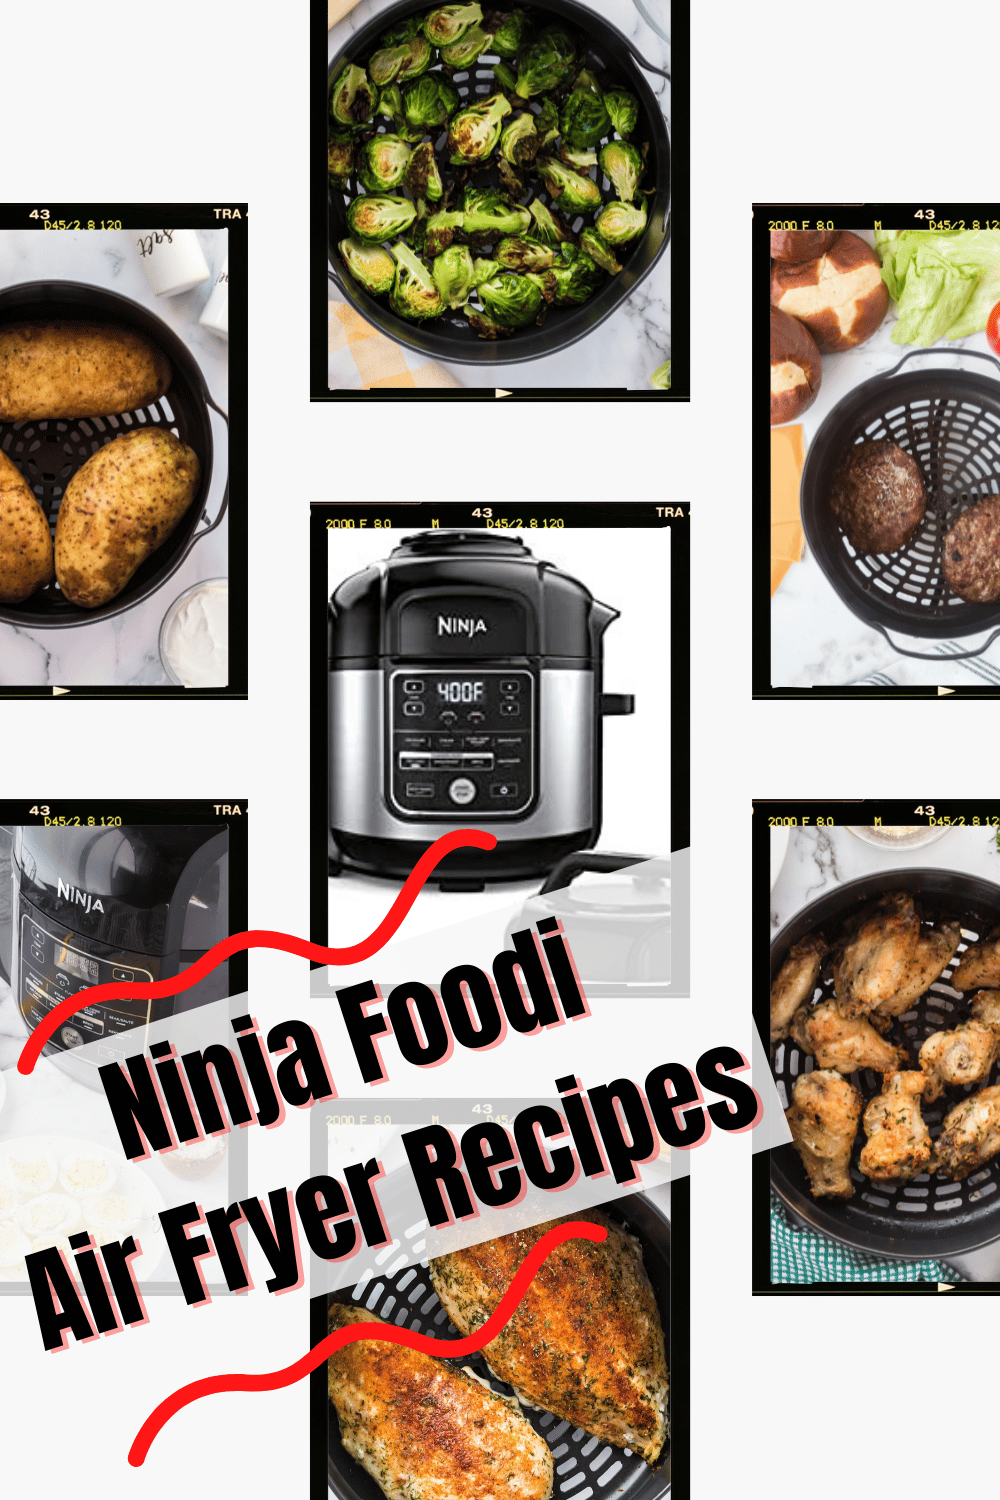 Images of ninja foodi air fryer recipes, text overlay.